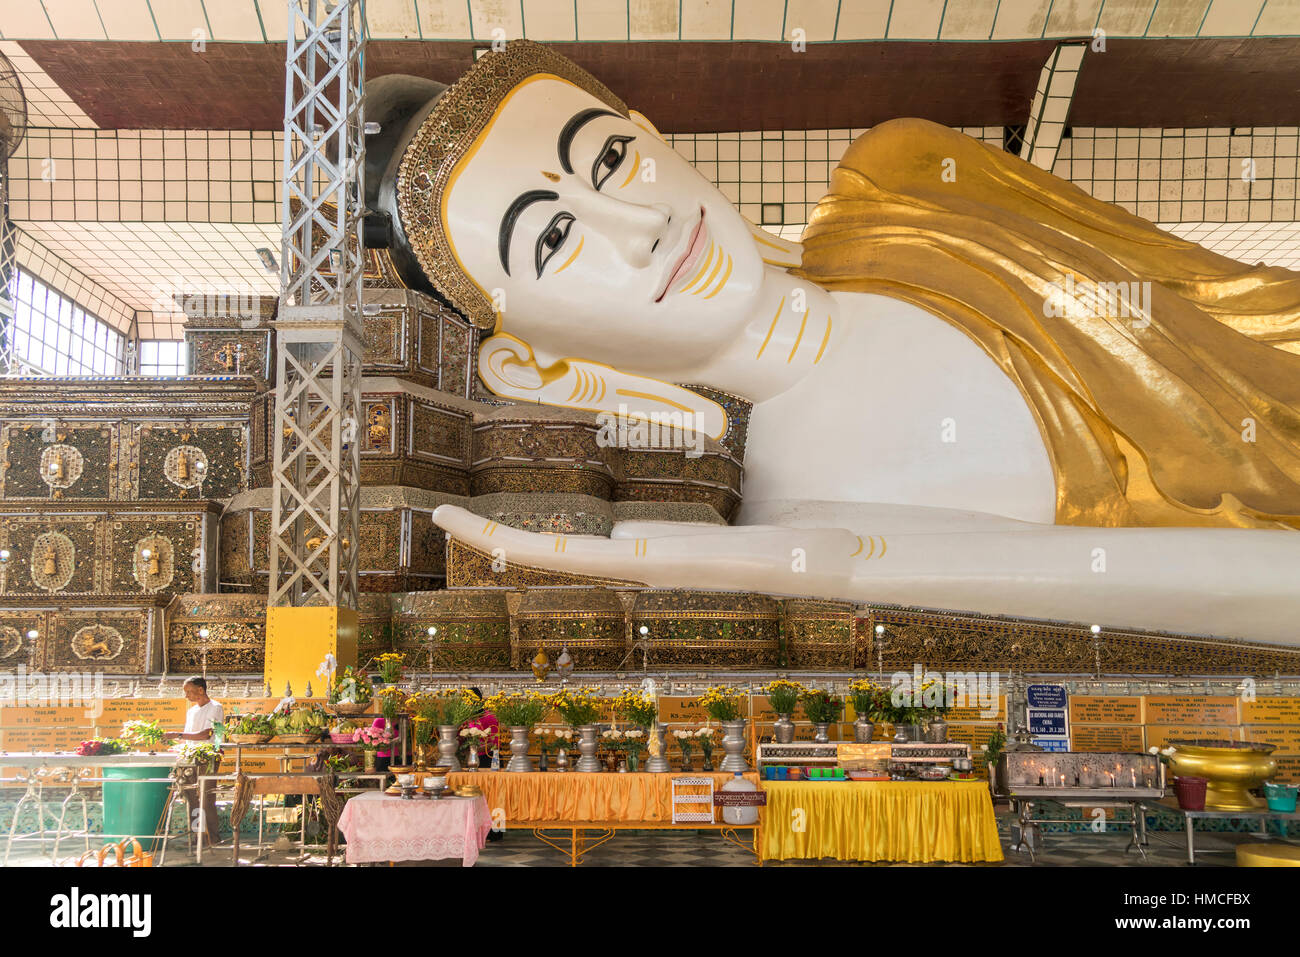 the giant reclining Shwethalyaung Buddha in Bago, Myanmar, Asia Stock Photo